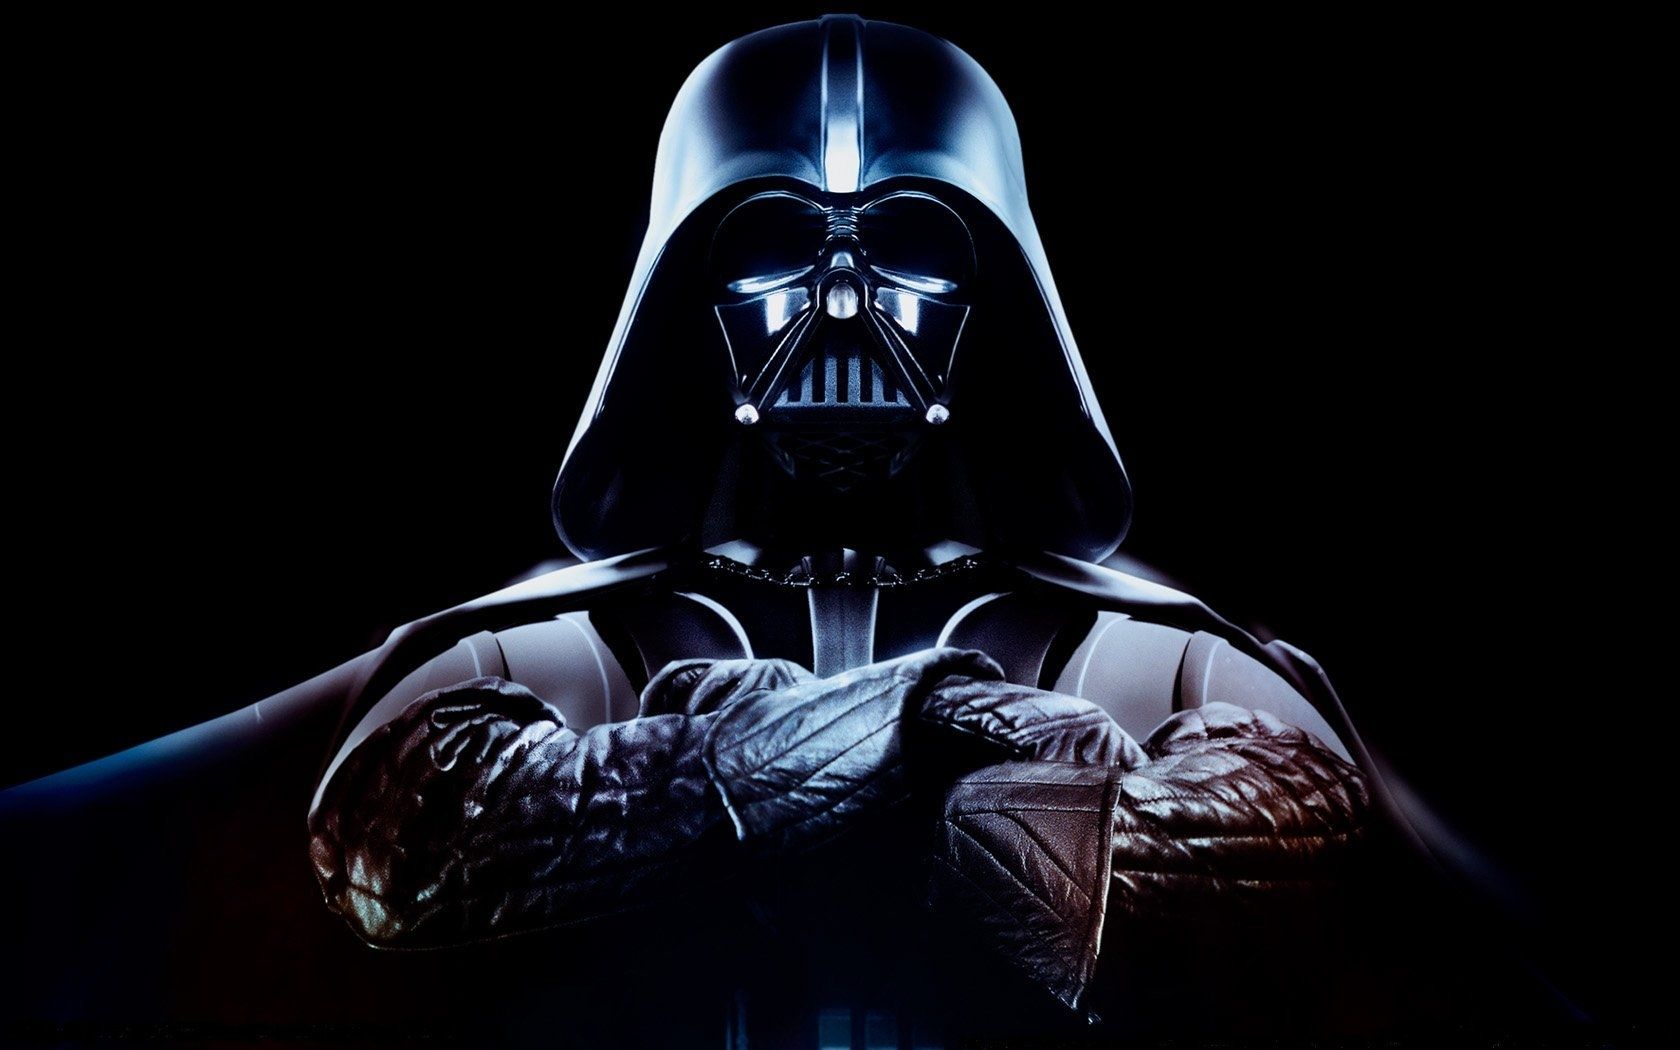 Best Darth Vader Wallpaper HD FULL HD 1080p For PC Background. Darth vader wallpaper, Vader star wars, Star wars episode vii